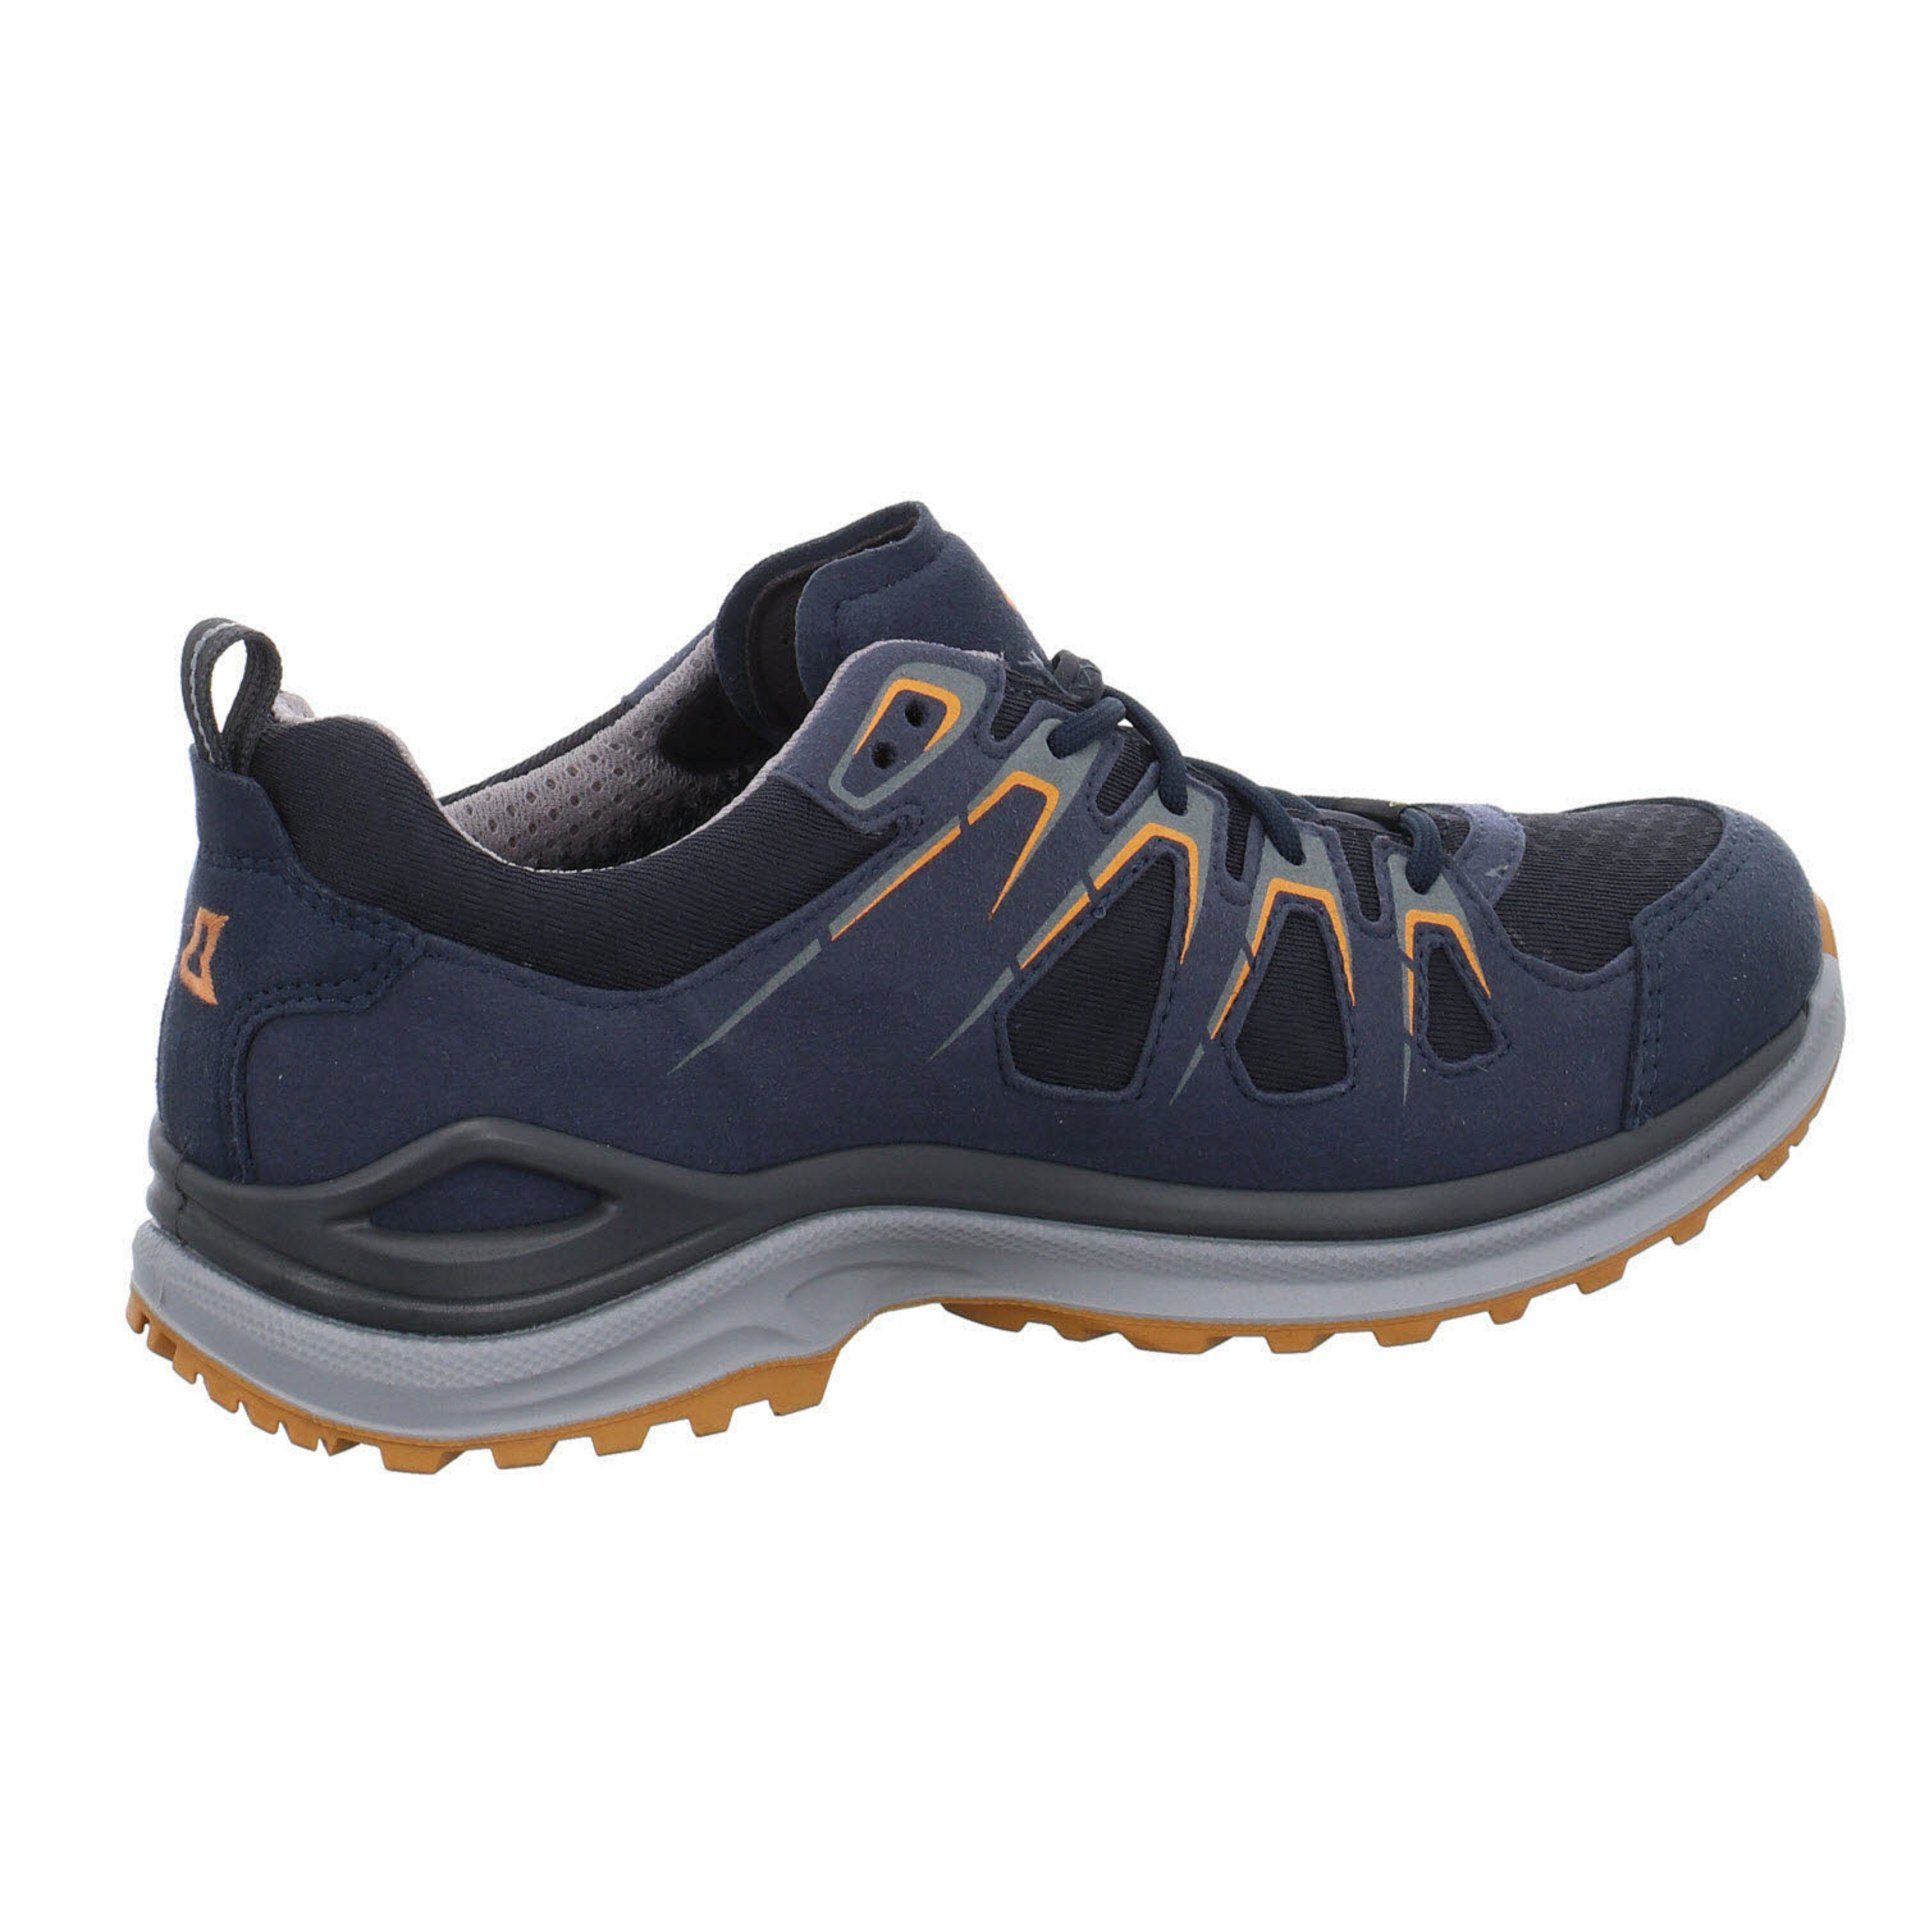 Innox stahlblau/marine Schuhe Outdoorschuh Synthetikkombination Outdoorschuh Damen Outdoor Lowa EVO Lo